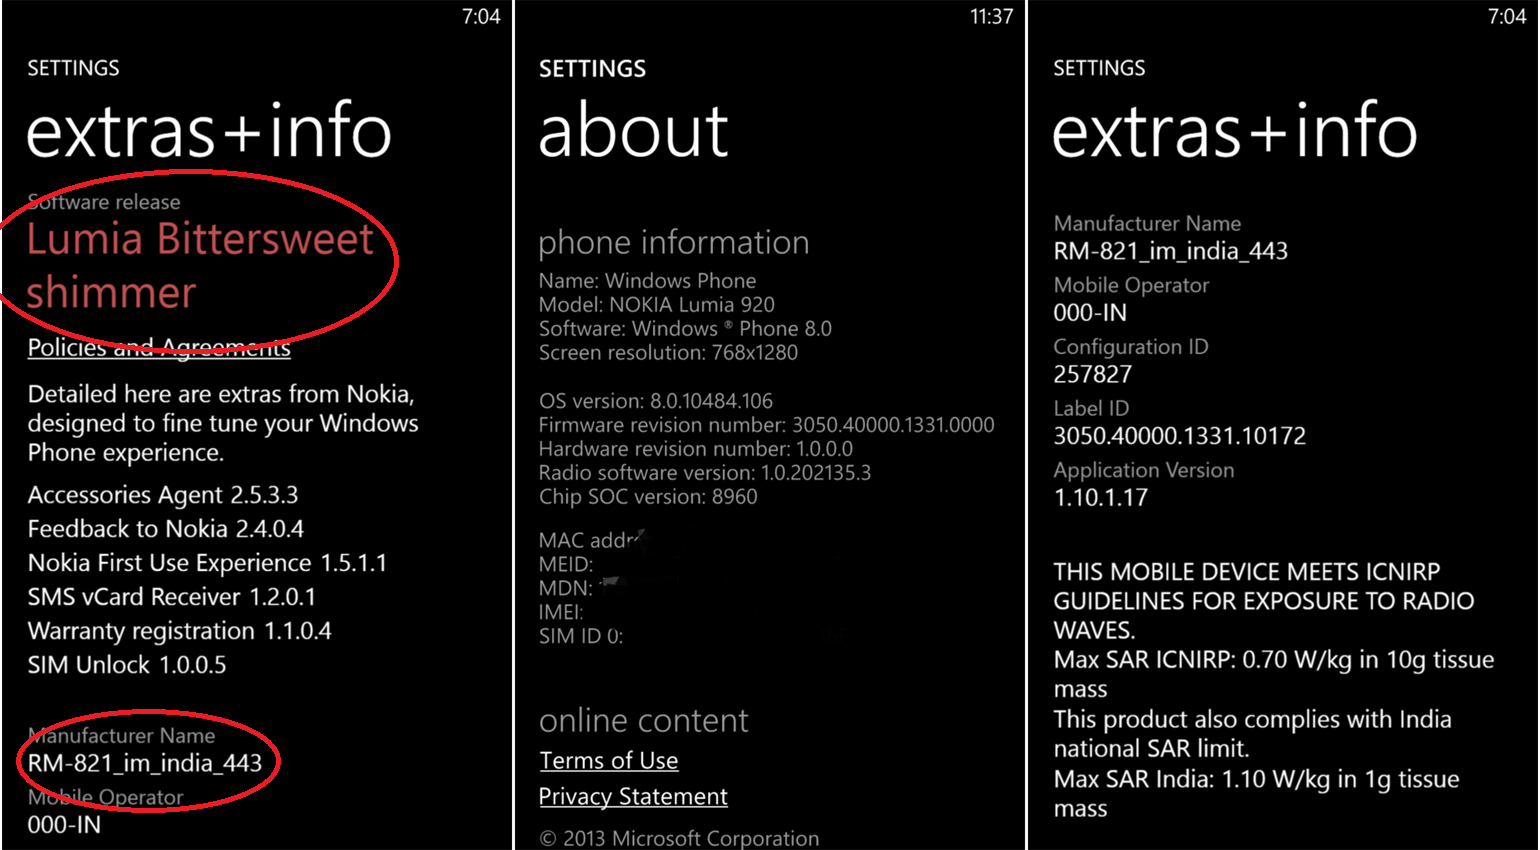 Windows Phone 8.0 GDR3 Settings info - Leaked image